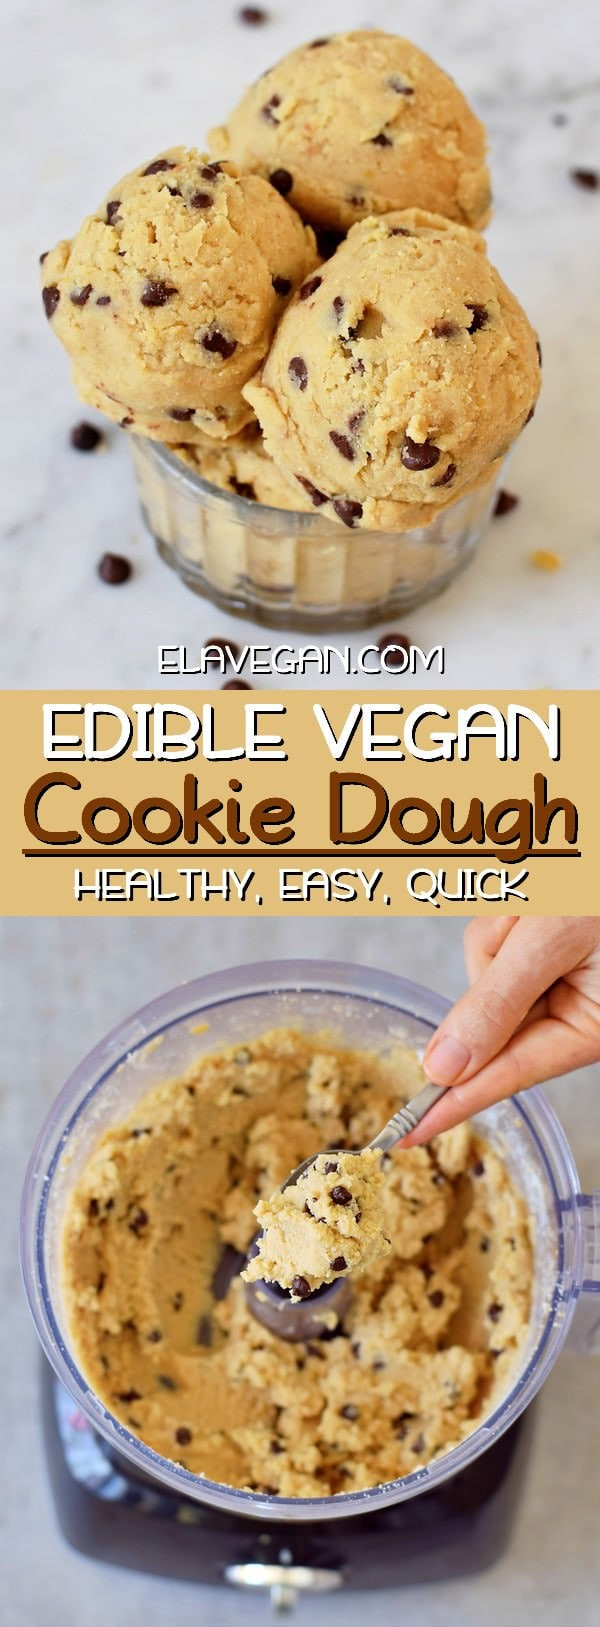 Vegan Cookie Dough Recipes
 Edible Vegan Cookie Dough